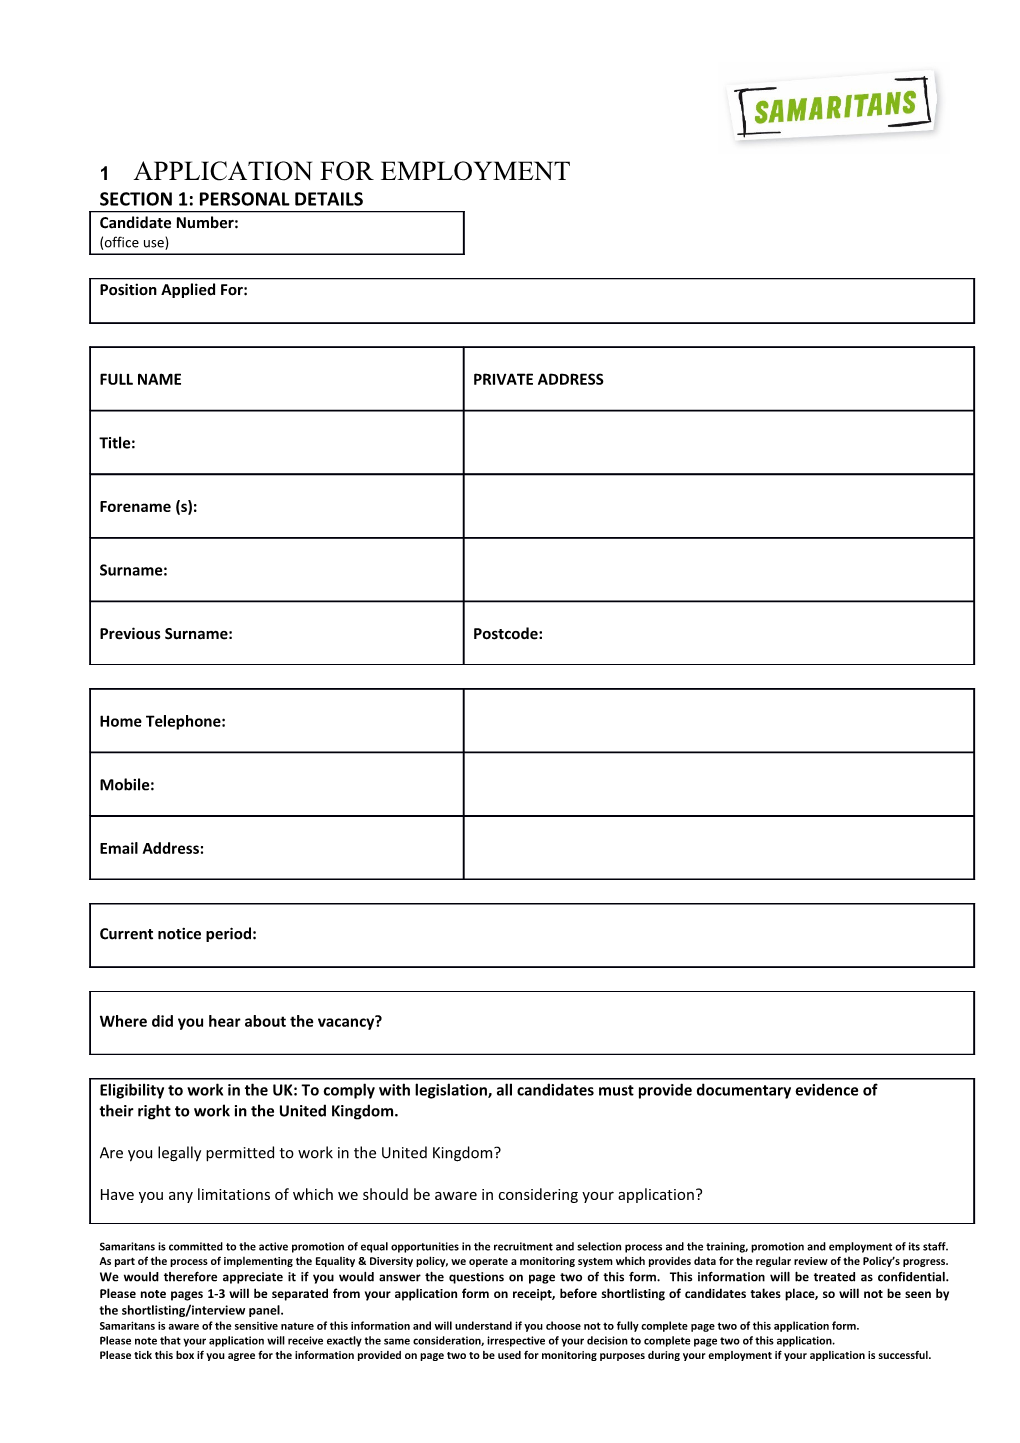 Samaritans Application Form